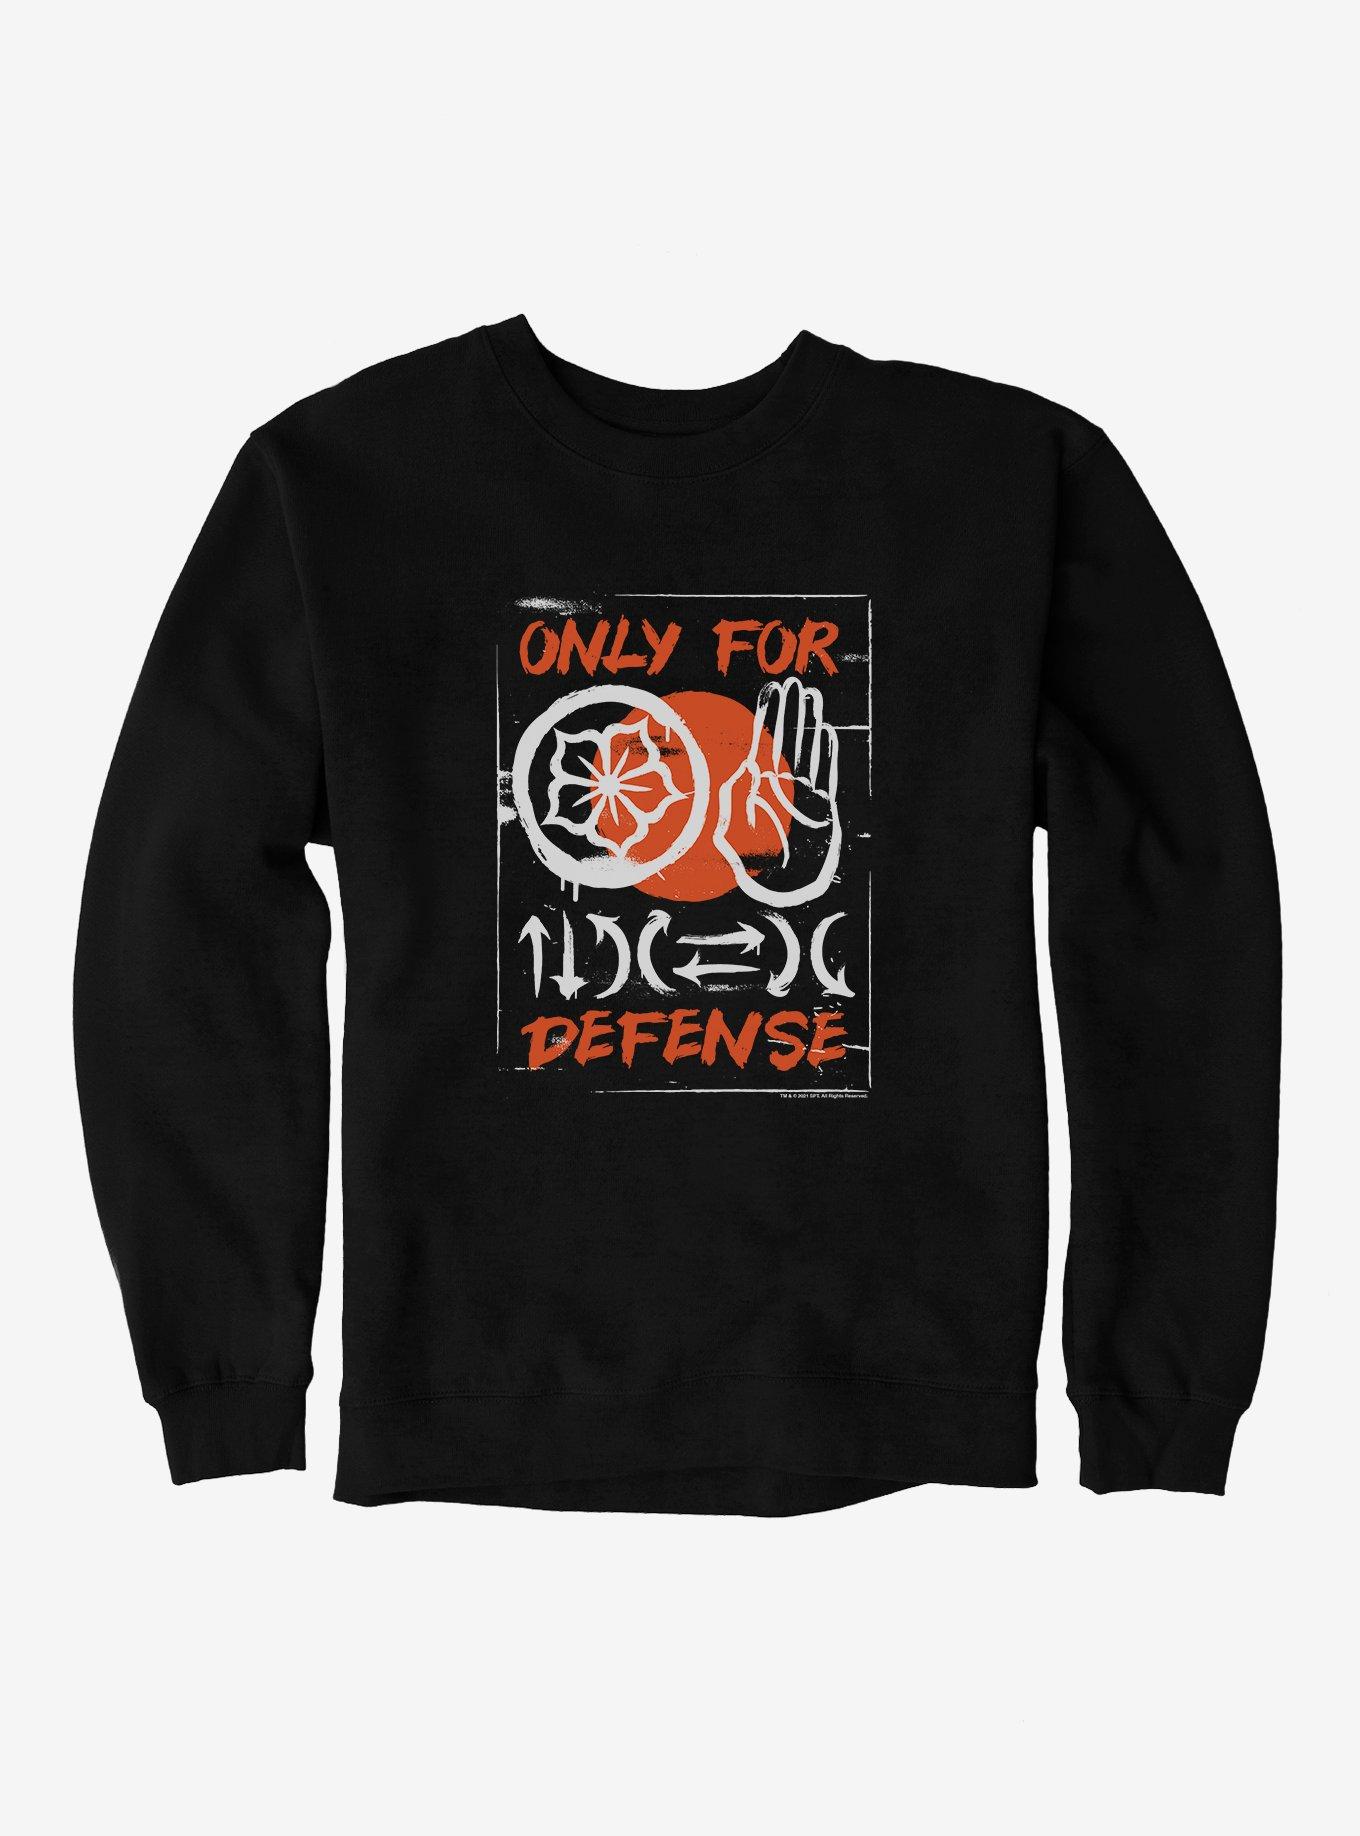 COBRA KAI S4 Defense Only Sweatshirt